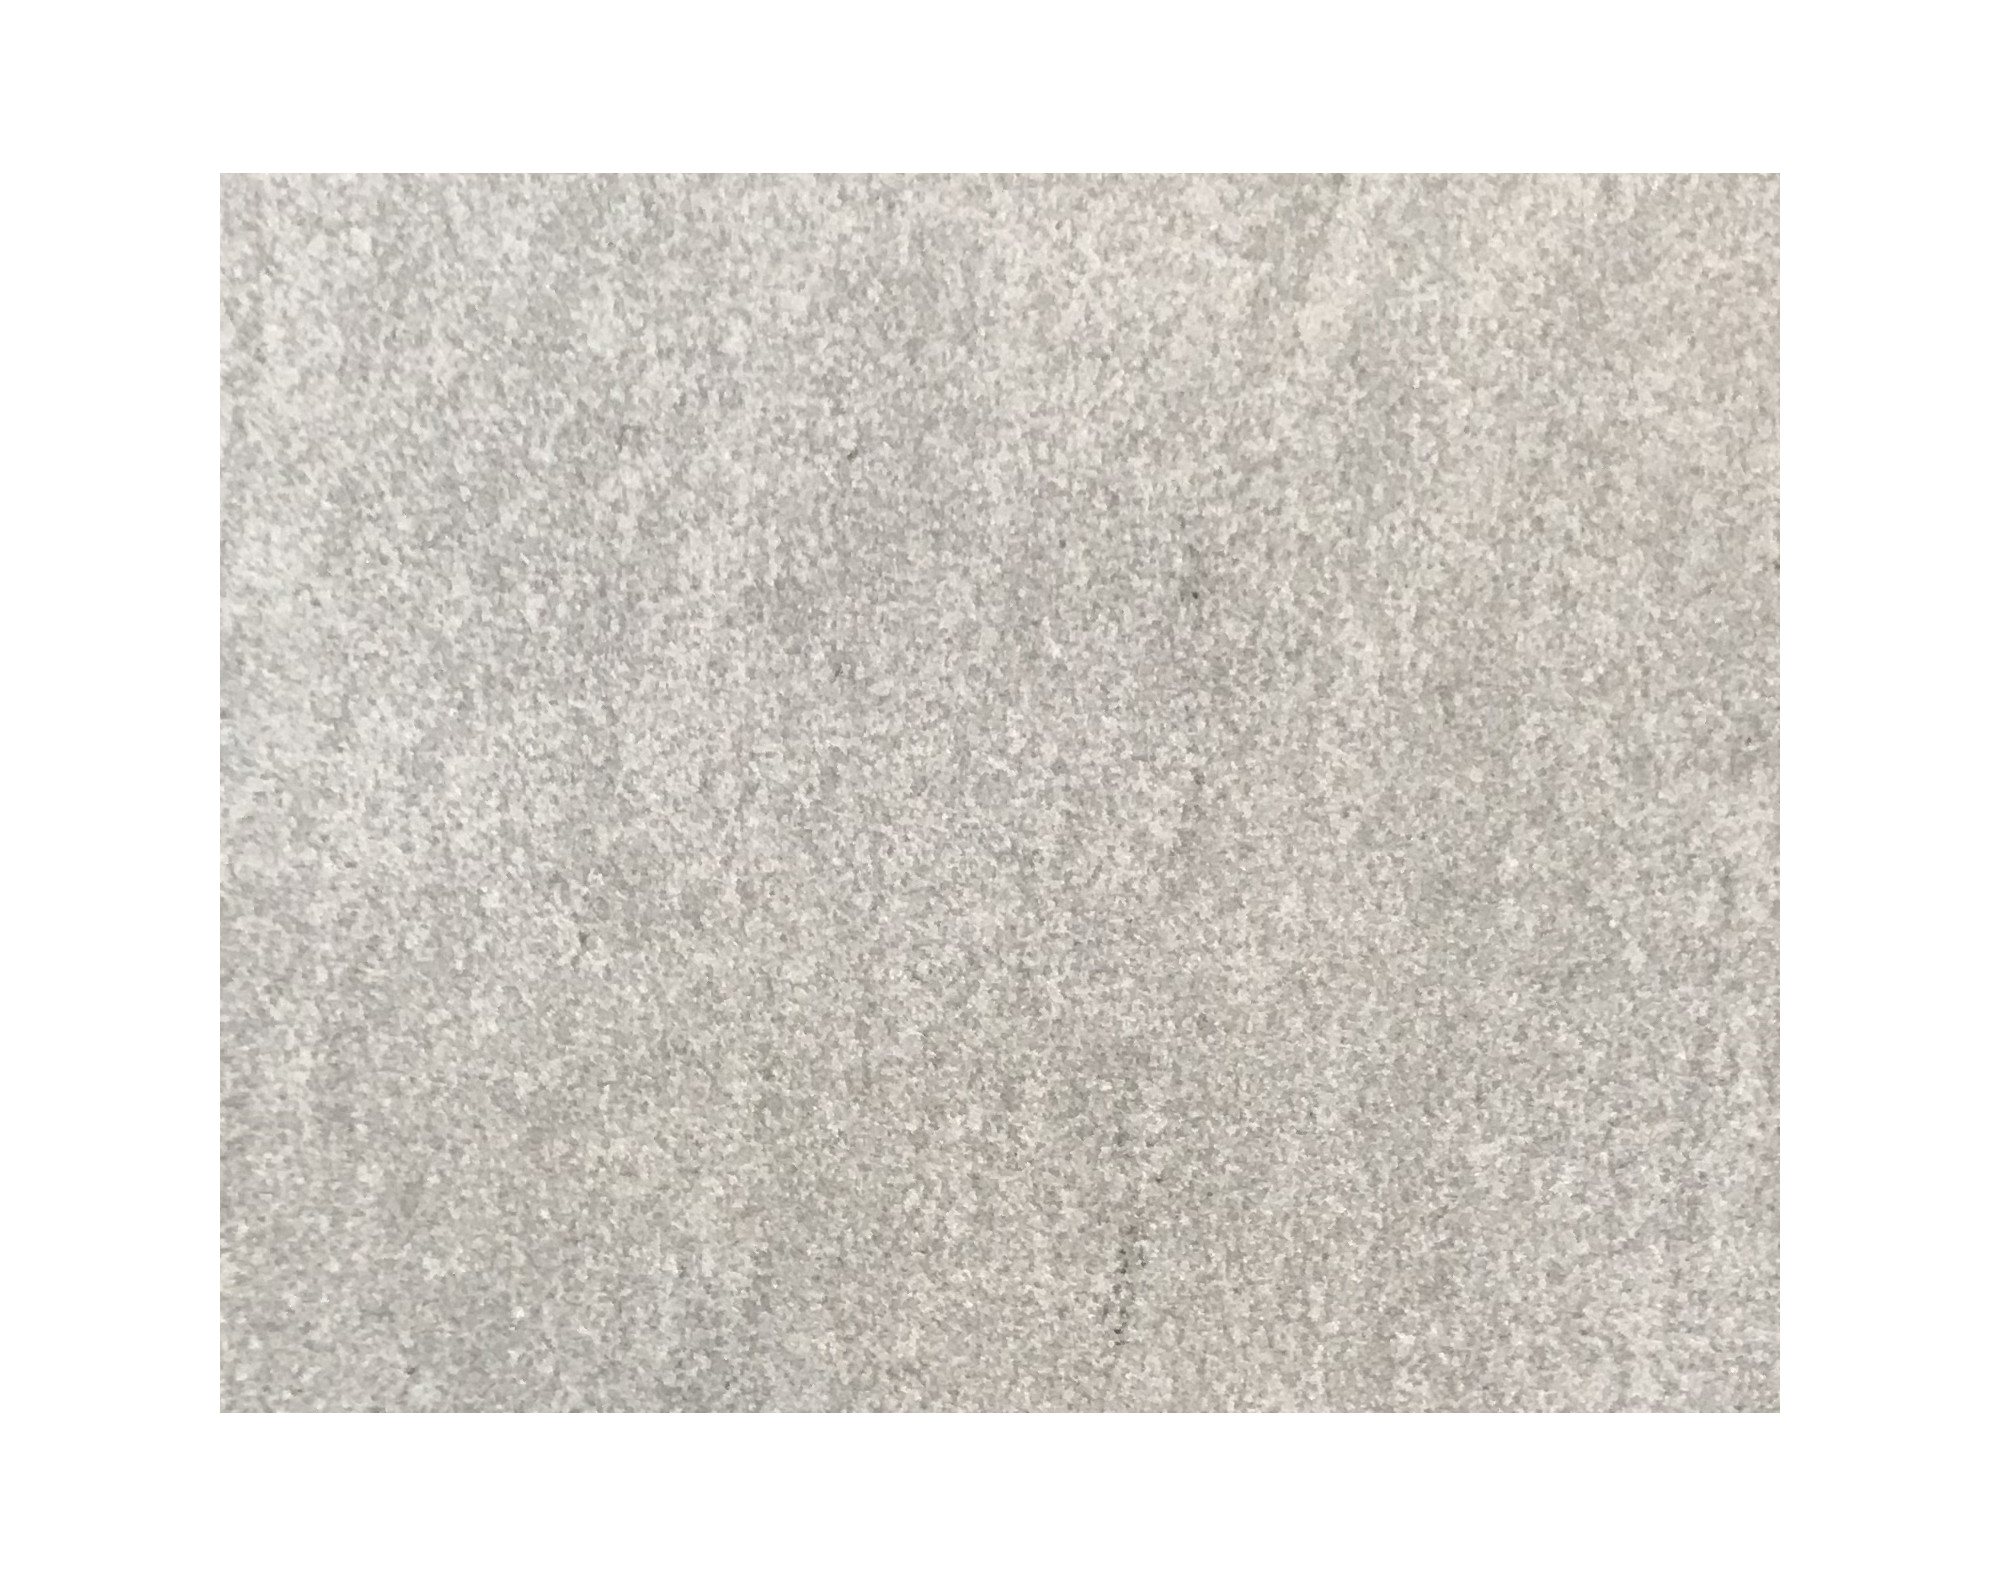 Harmo roc firenzeset, keramiek-serie, rond d:5,00m, zand grijs, keramisch porselein